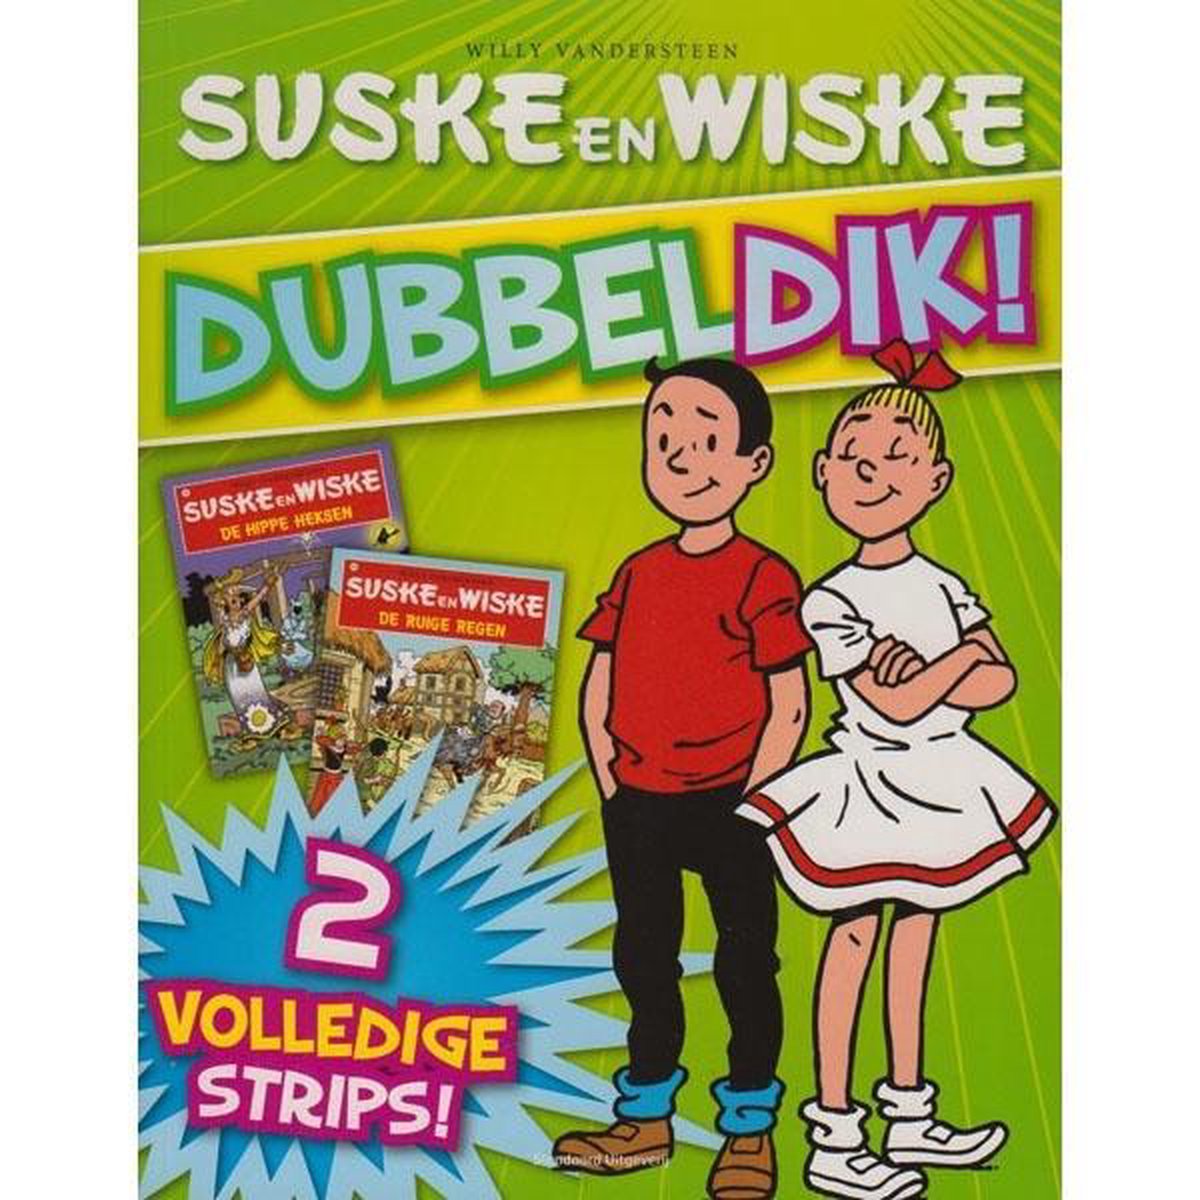 "Suske en Wiske  - Dubbeldik stripboek met 2 volledige strips"